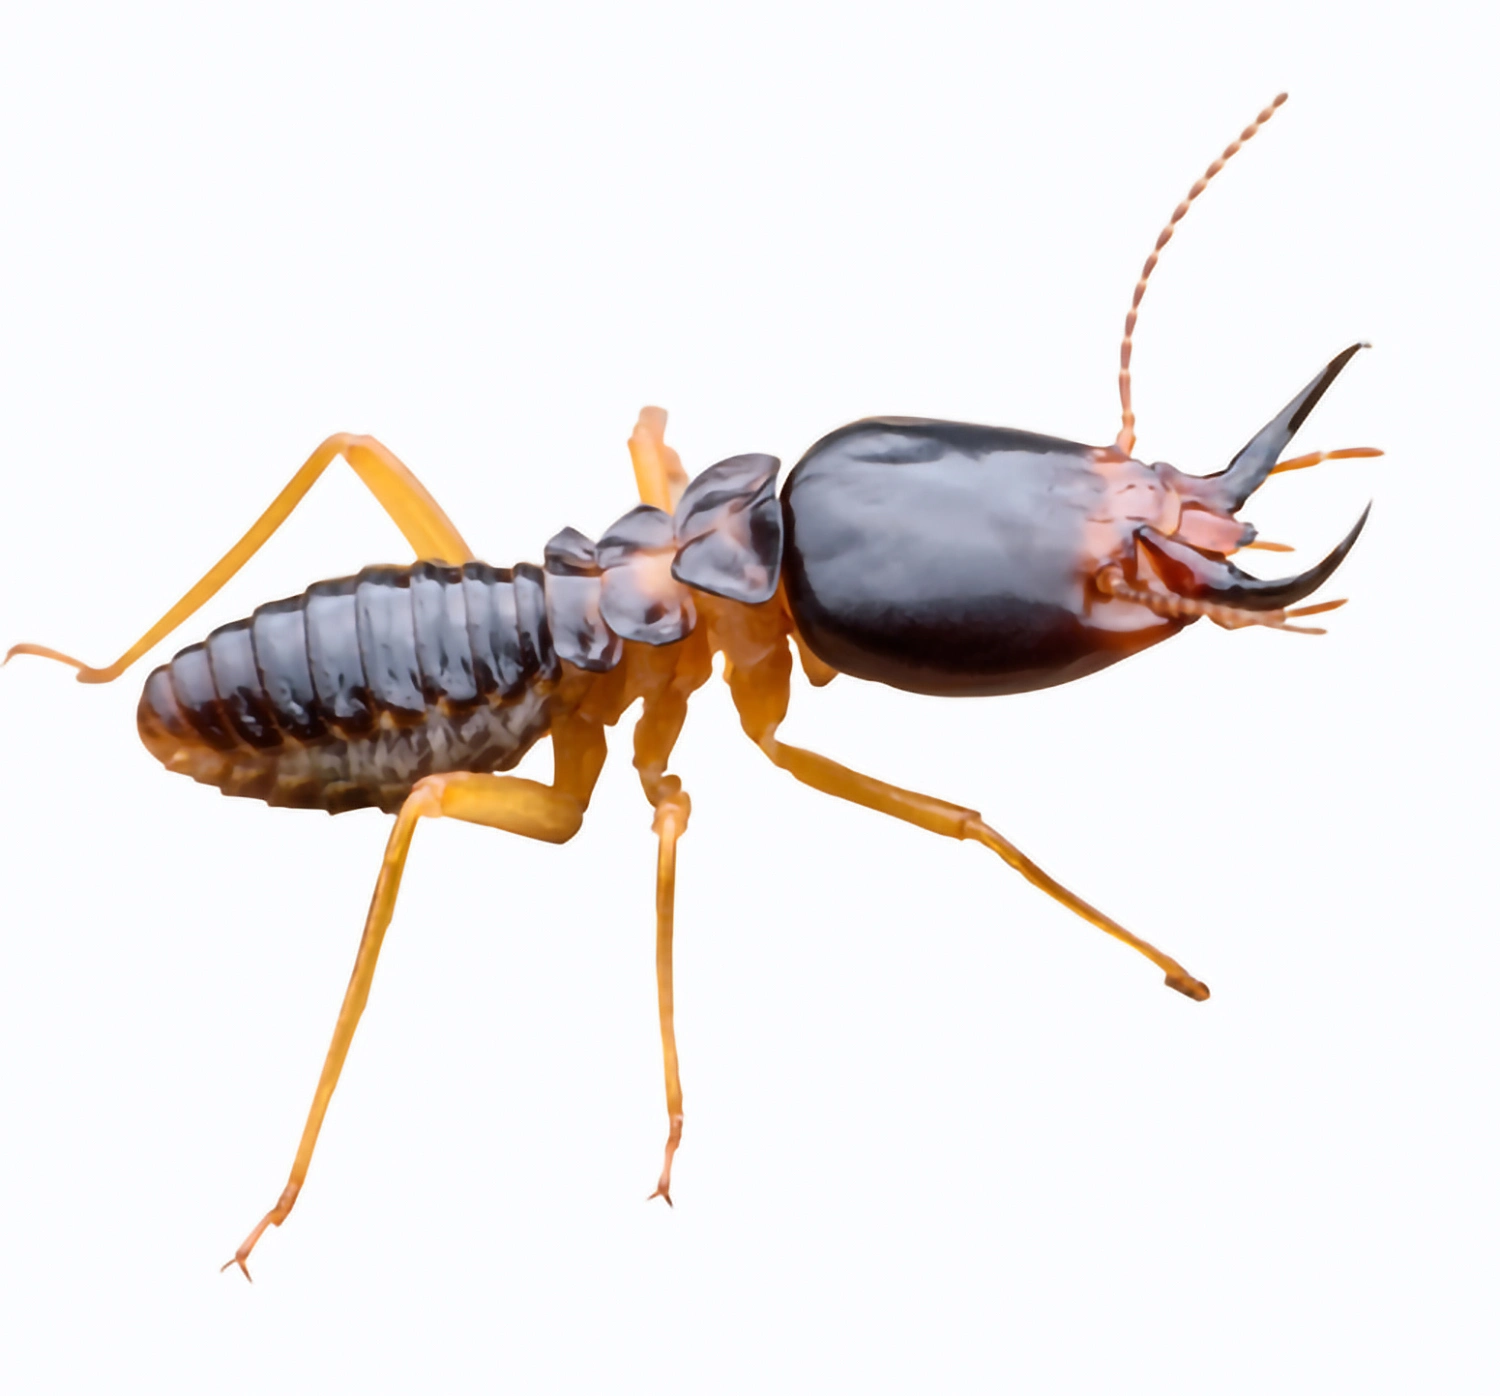 Termite isolated on white background stock photo